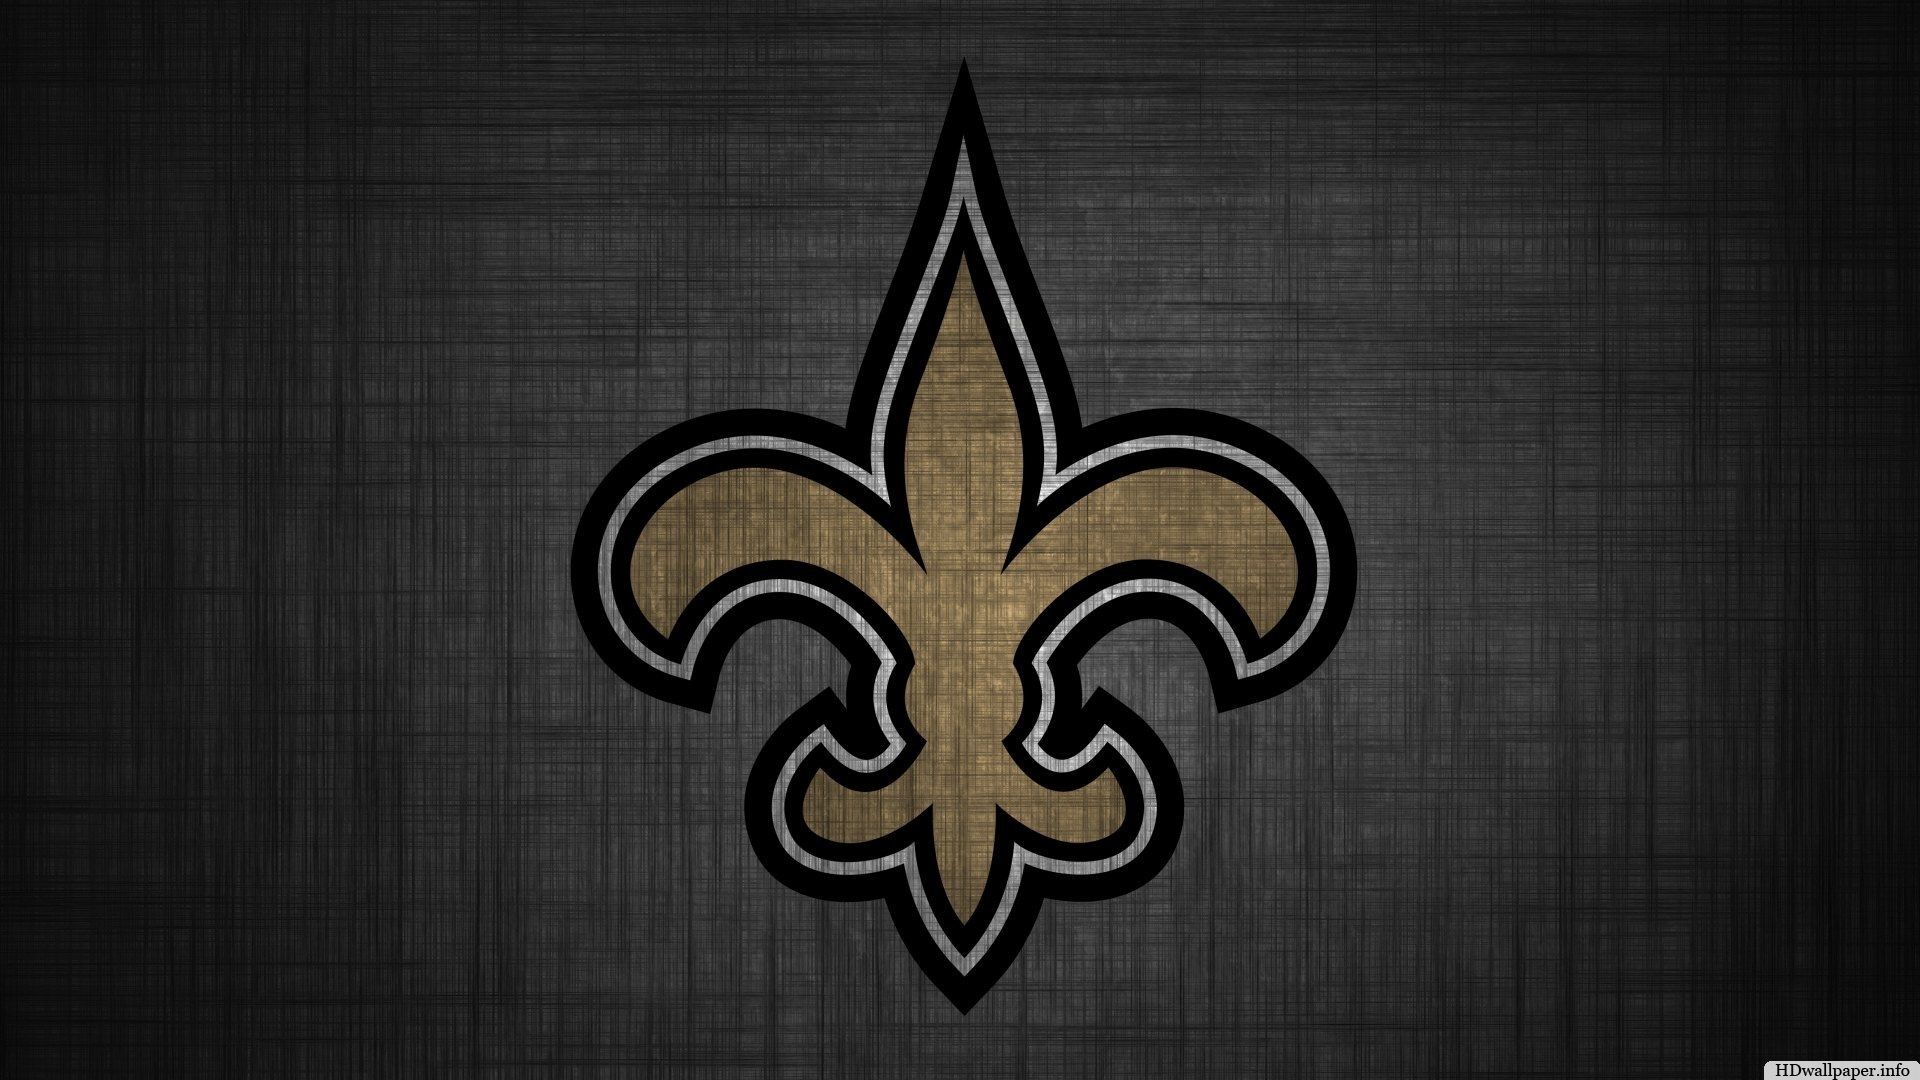 New Orleans Saints Wallpapers  Top 25 Best New Orleans Saints Backgrounds  Download